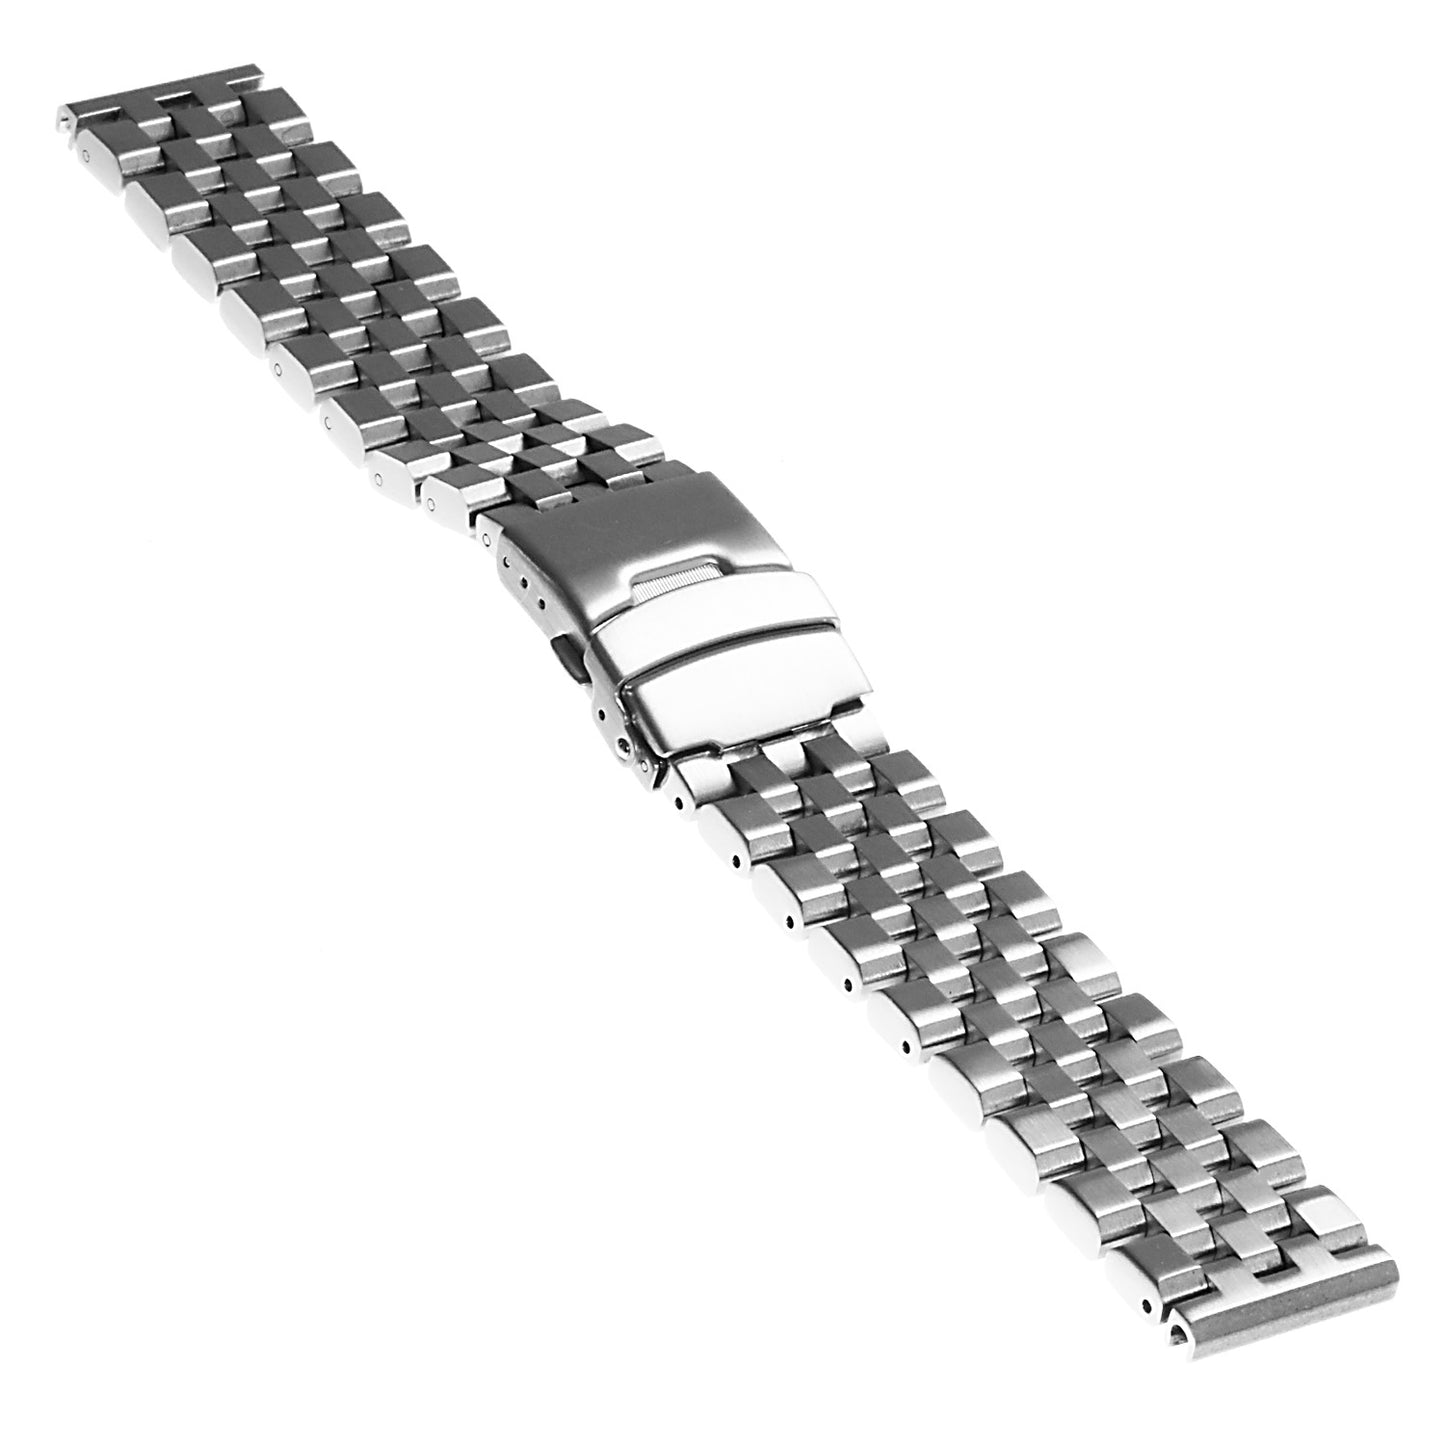 Super Engineer Bracelet for Samsung Galaxy Watch Active2